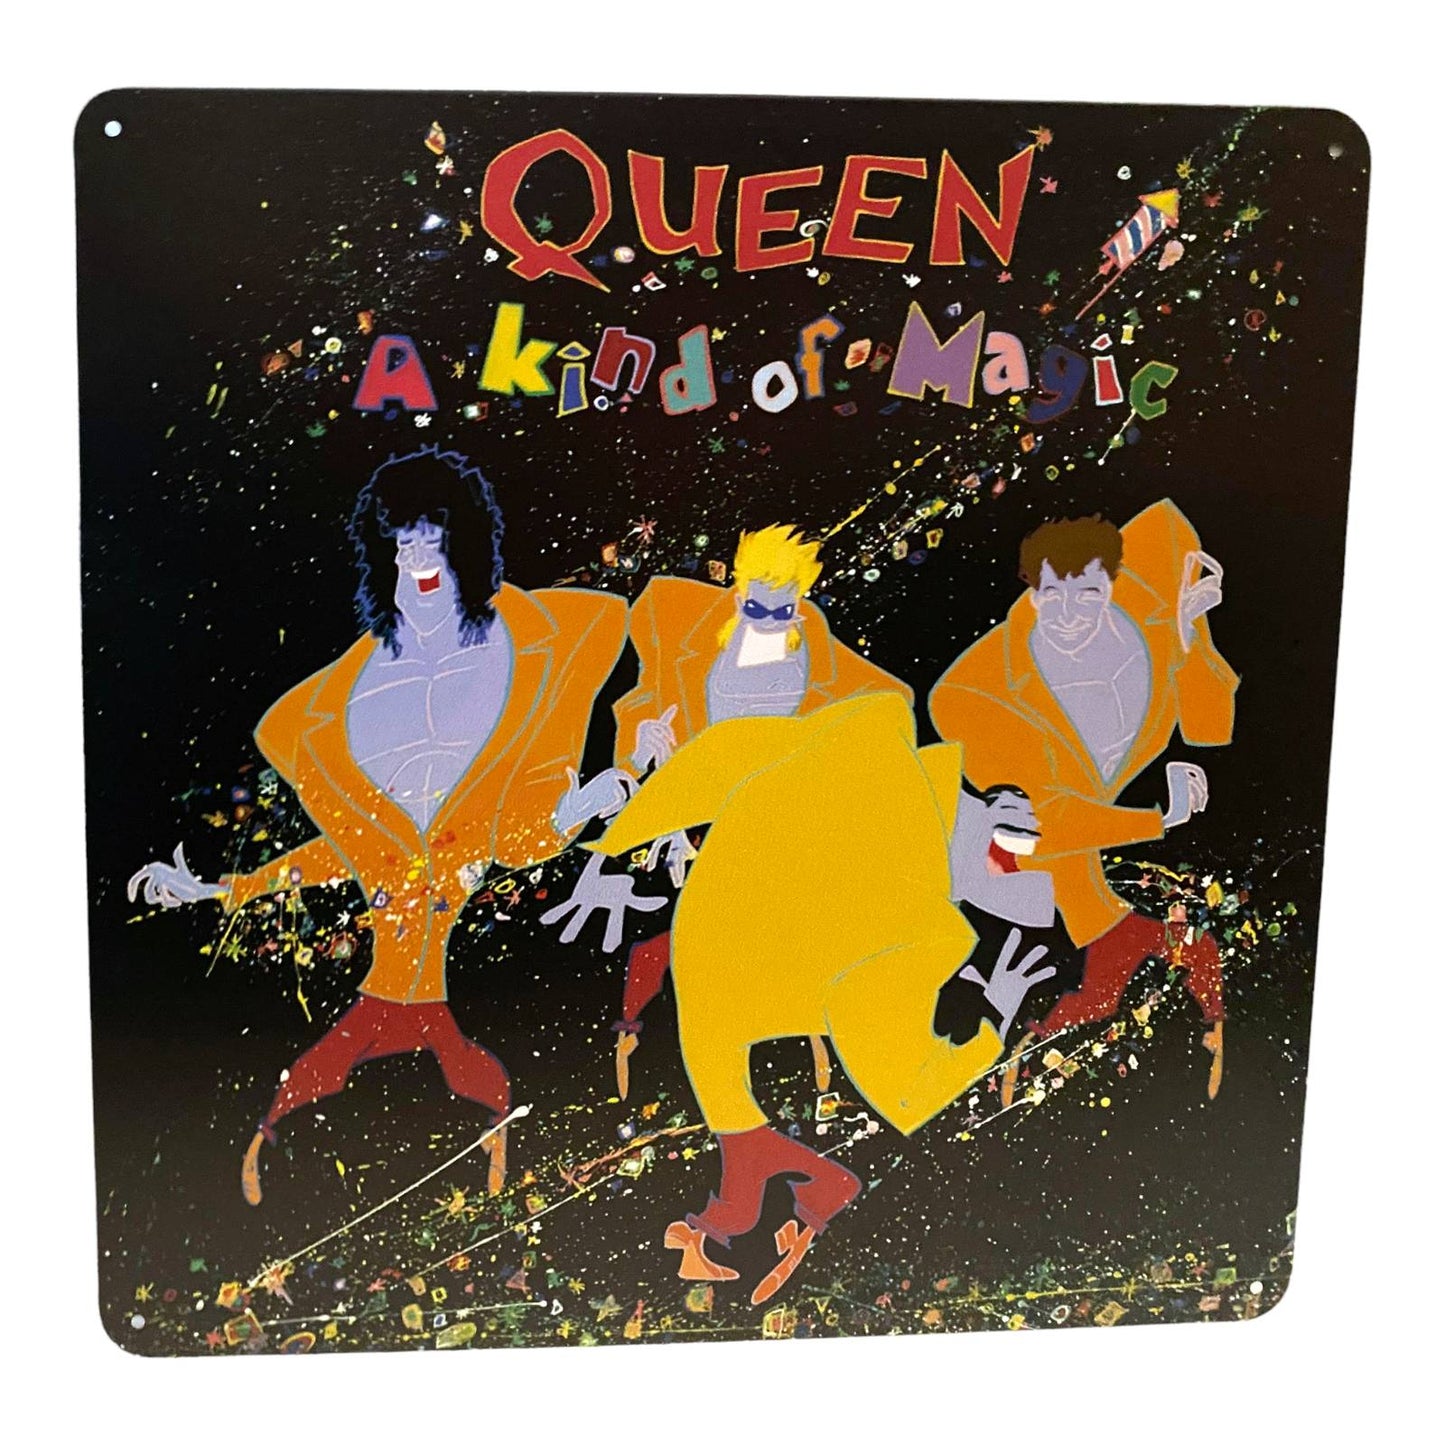 Queen - A Kind of Magic Album Cover Metal Print Tin Sign 12"x 12"